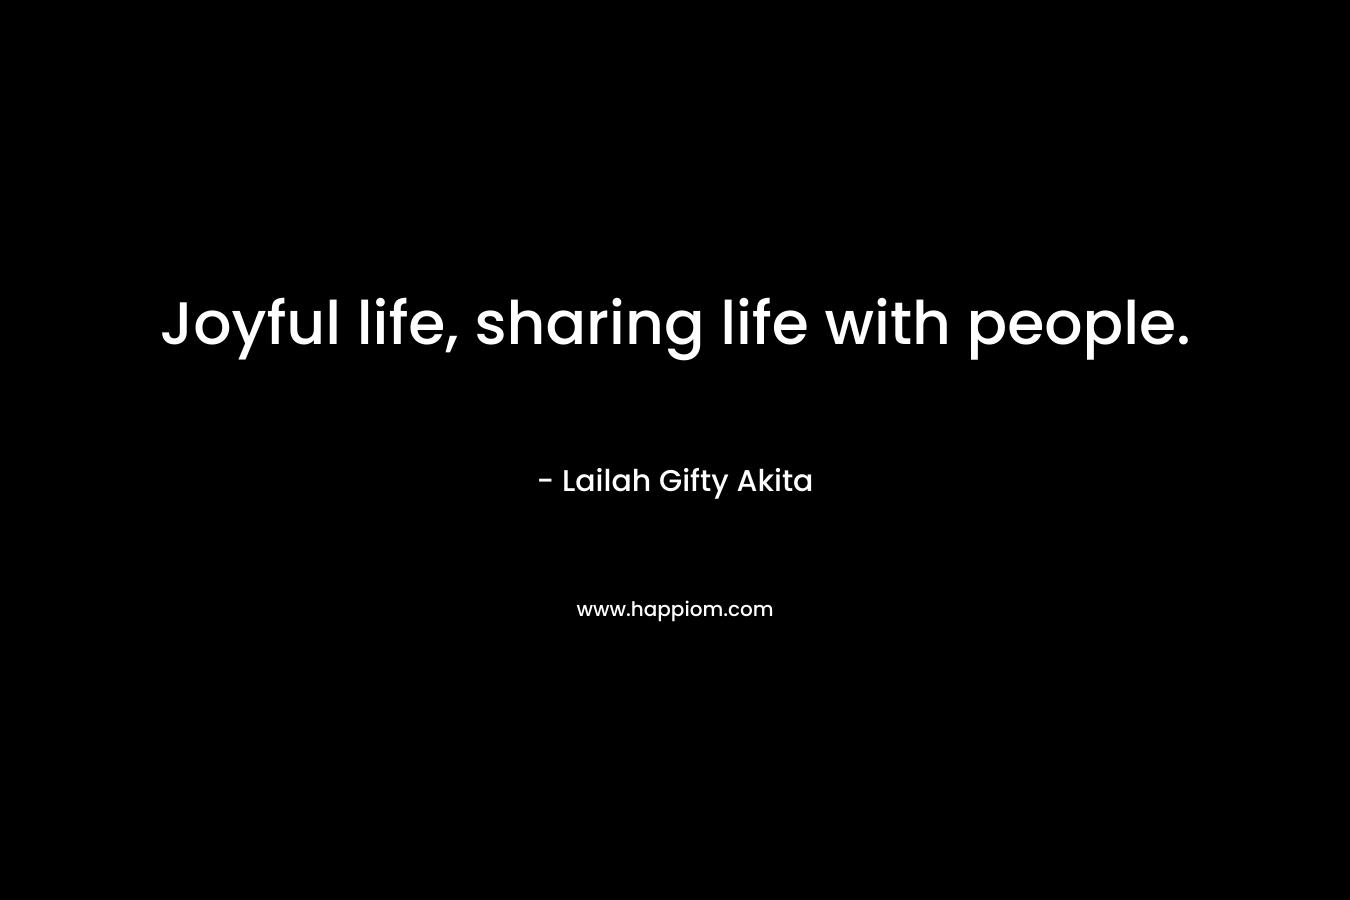 Joyful life, sharing life with people.